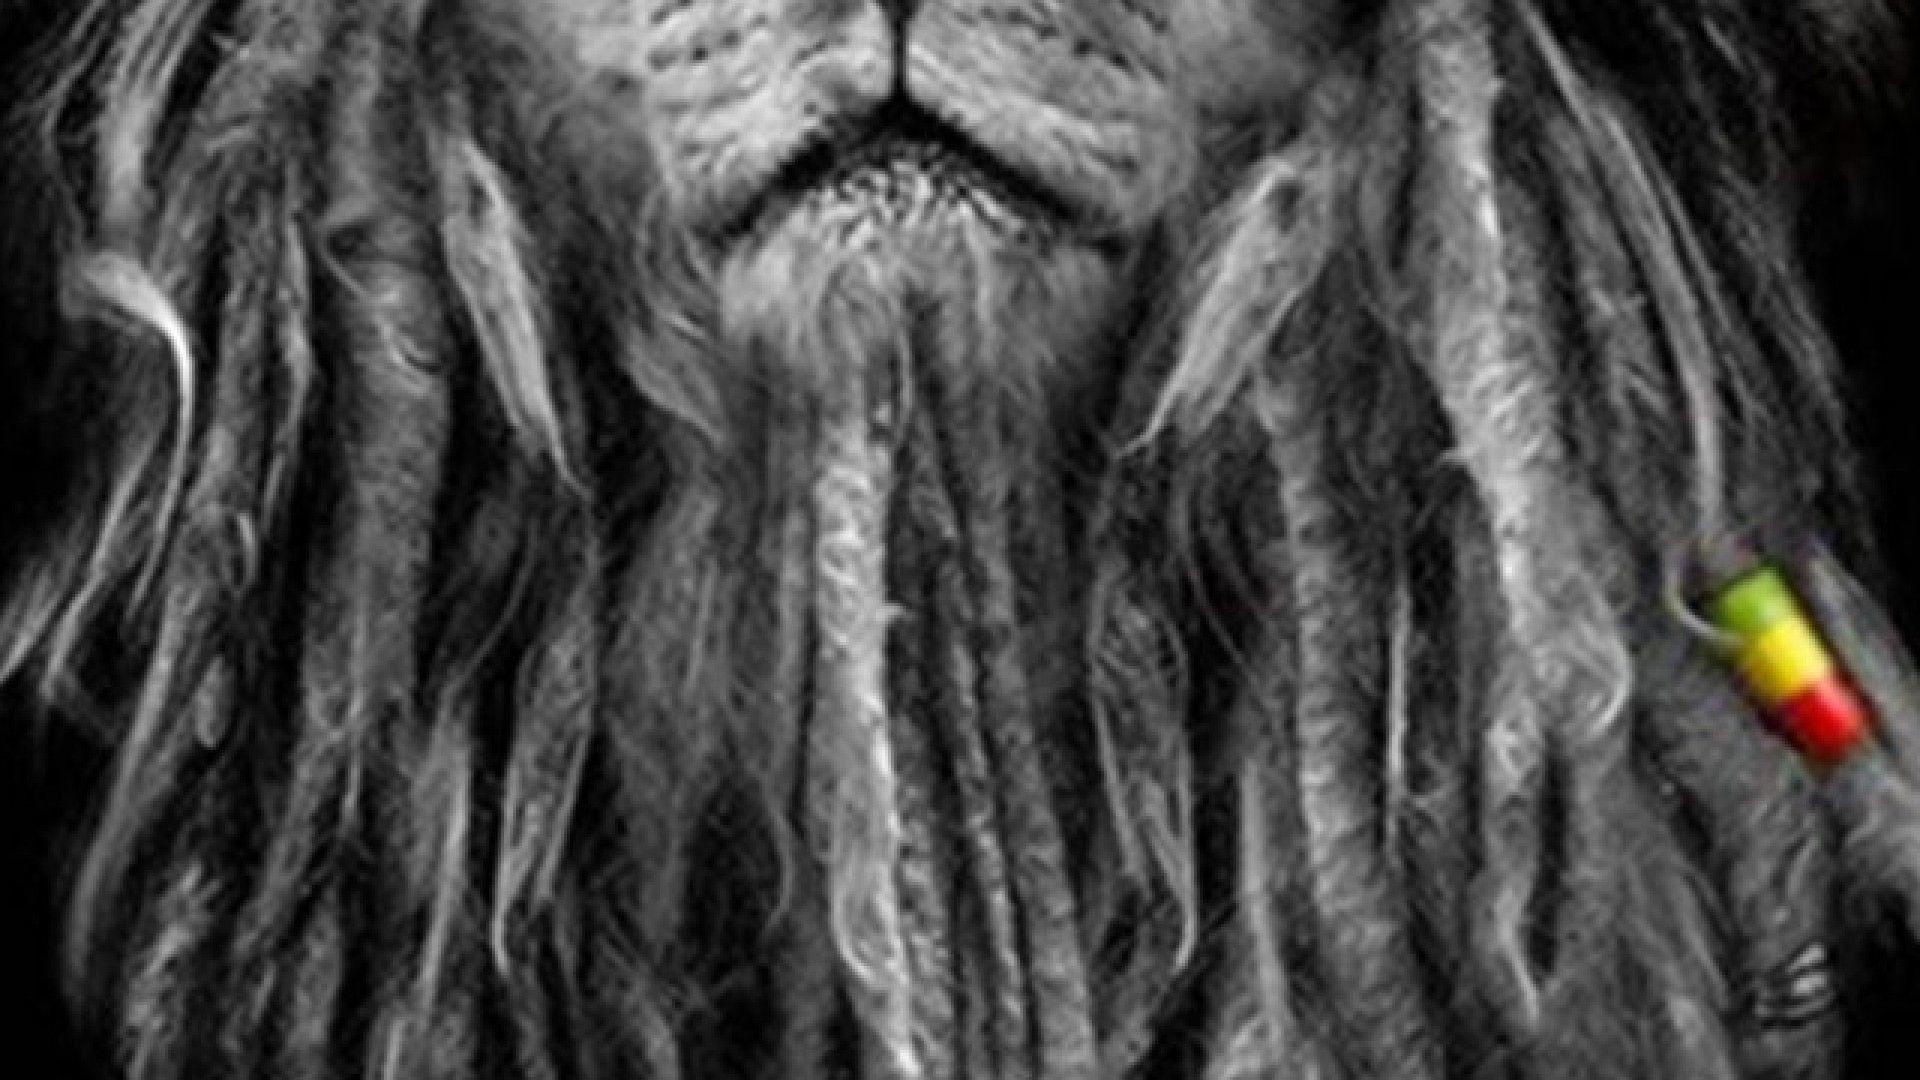 1920x1080 Wallpaper Rasta Lion Rasta Lion Iphone Wallpapers Wallpaper | HD Wallpapers  | Pinterest | Rasta lion, Lion wallpaper and Lions